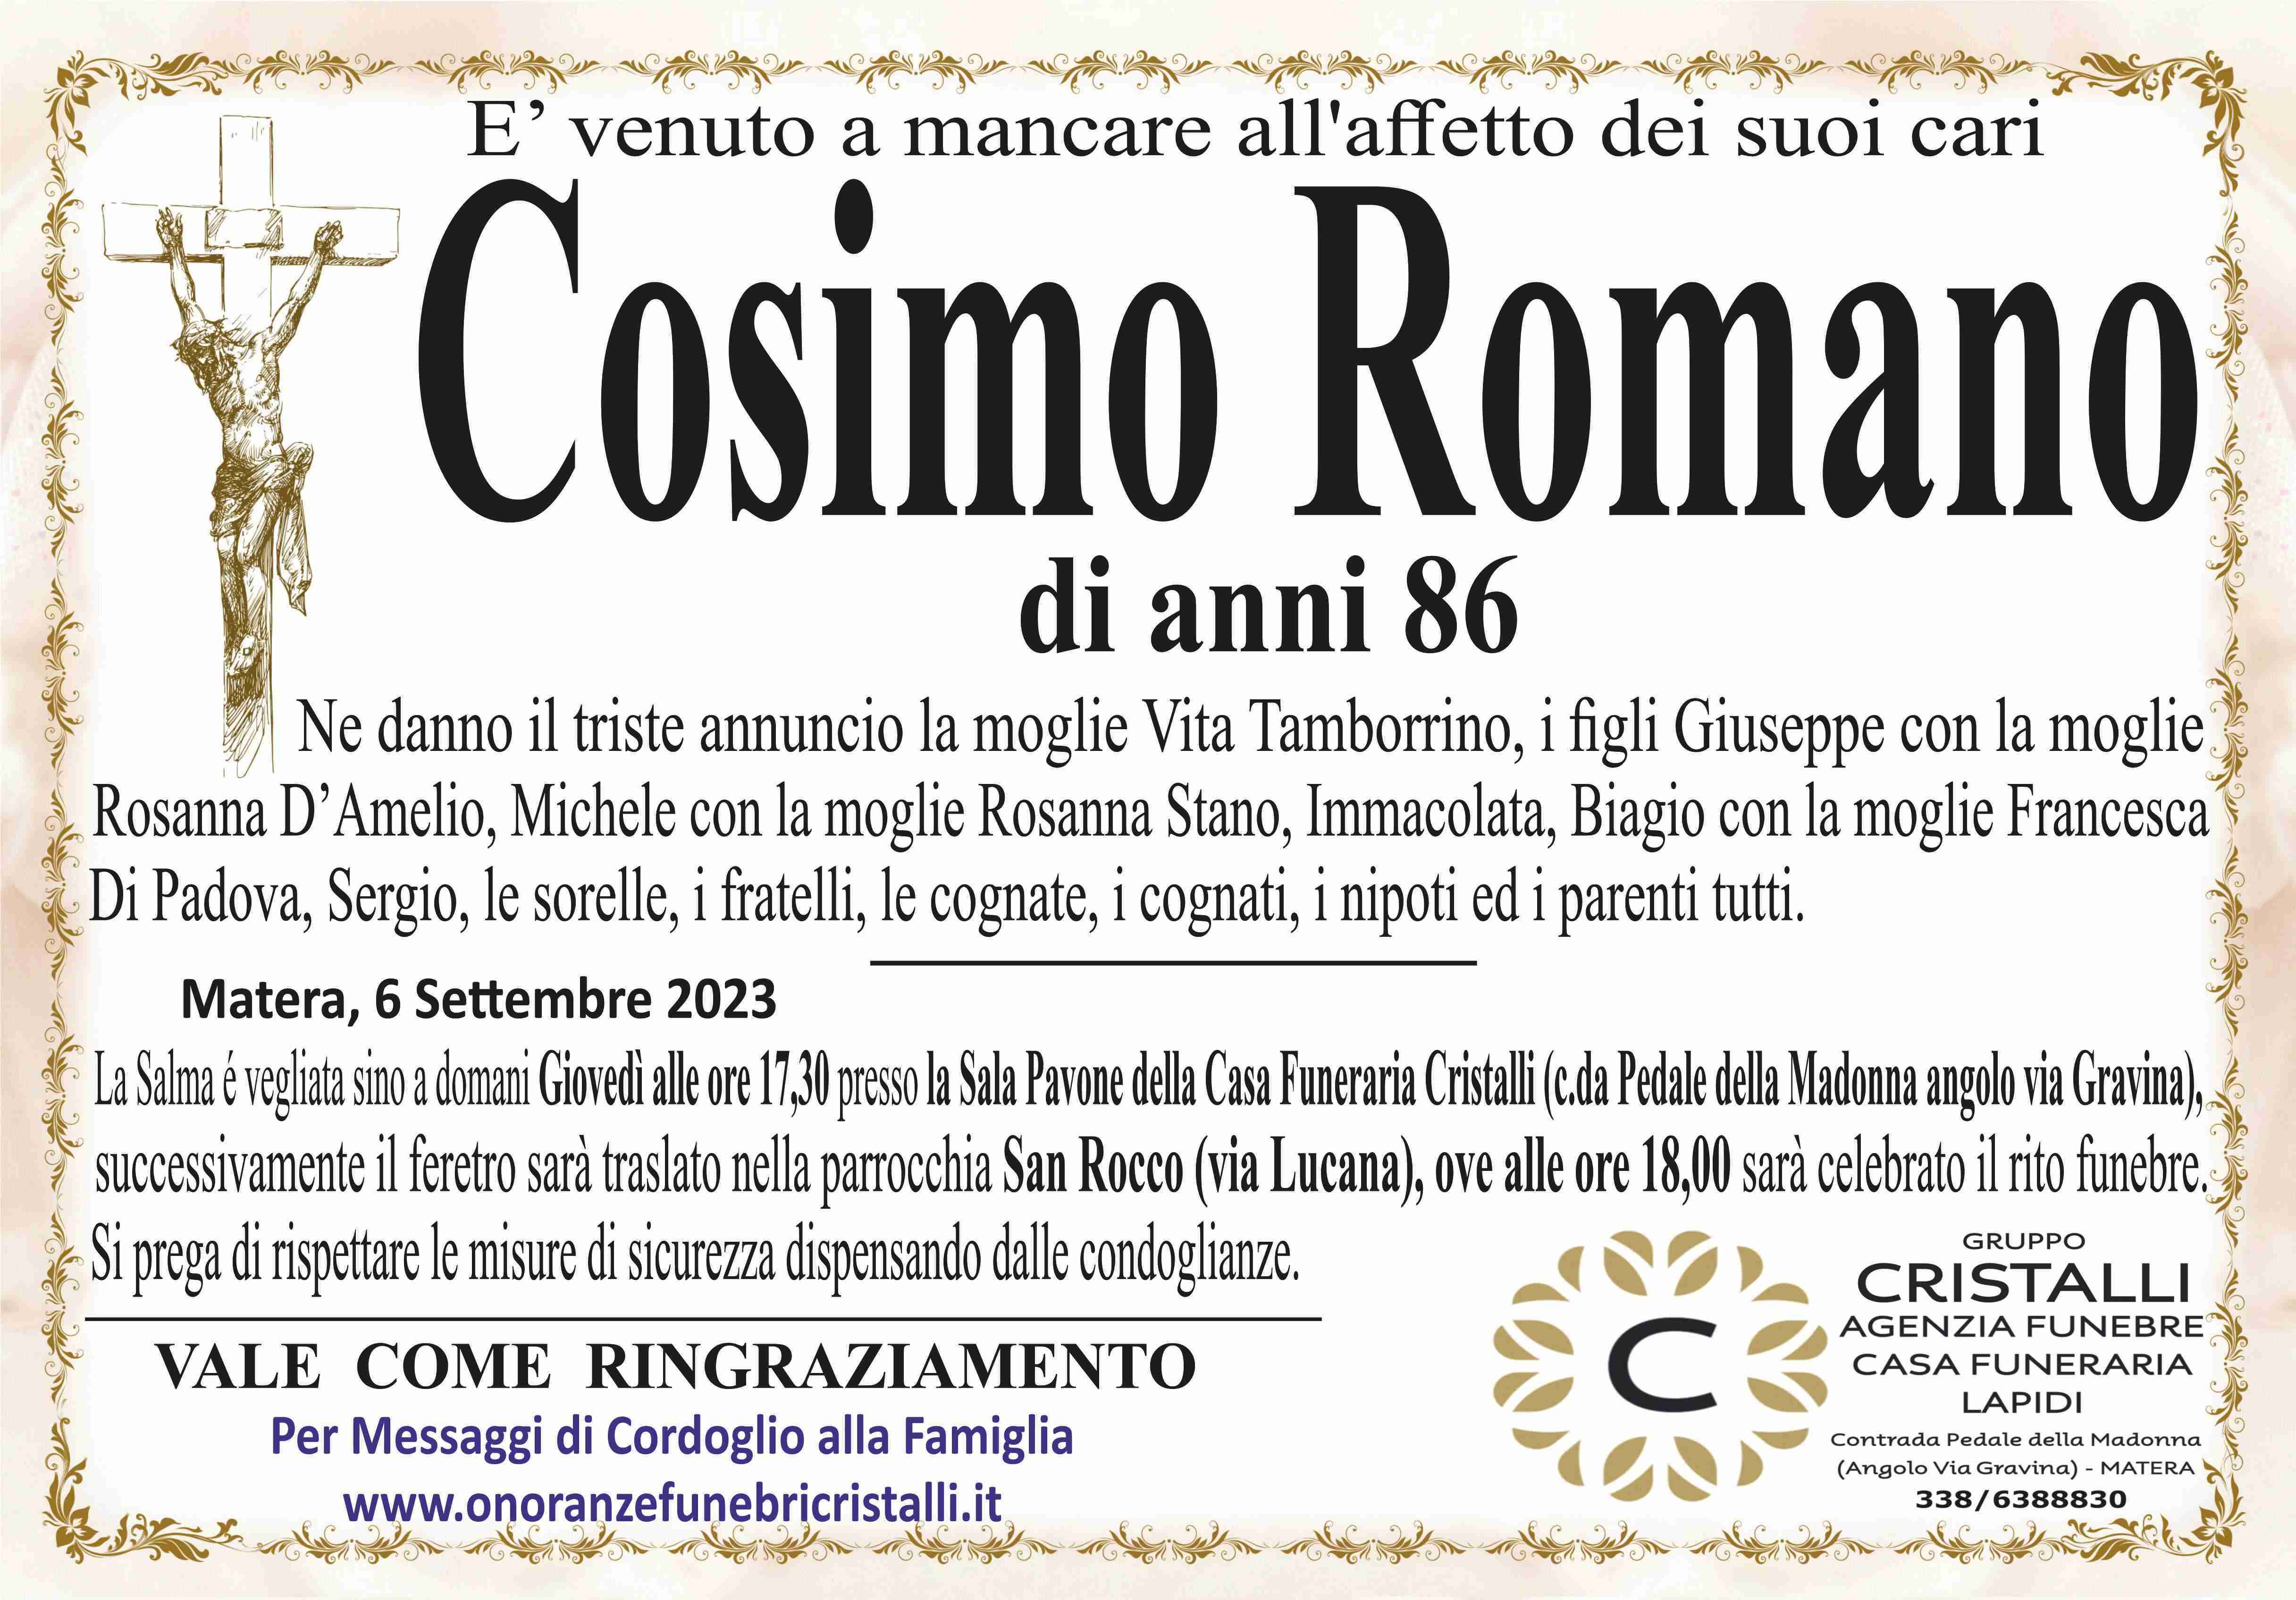 Cosimo Romano